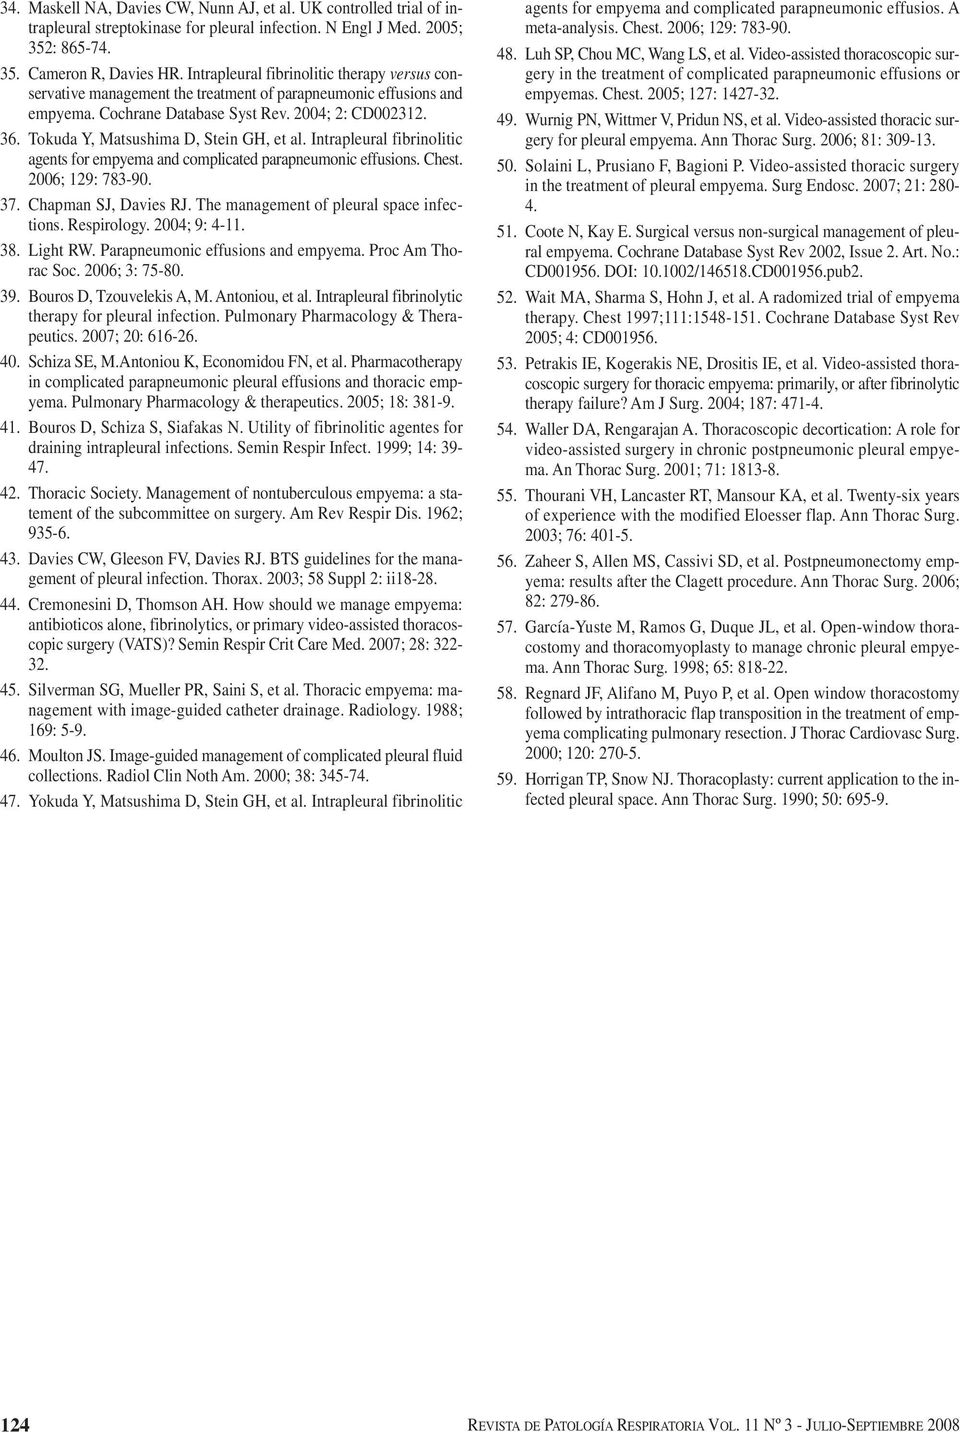 Tokuda Y, Matsushima D, Stein GH, et al. Intrapleural fibrinolitic agents for empyema and complicated parapneumonic effusions. Chest. 2006; 129: 783-90. 37. Chapman SJ, Davies RJ.